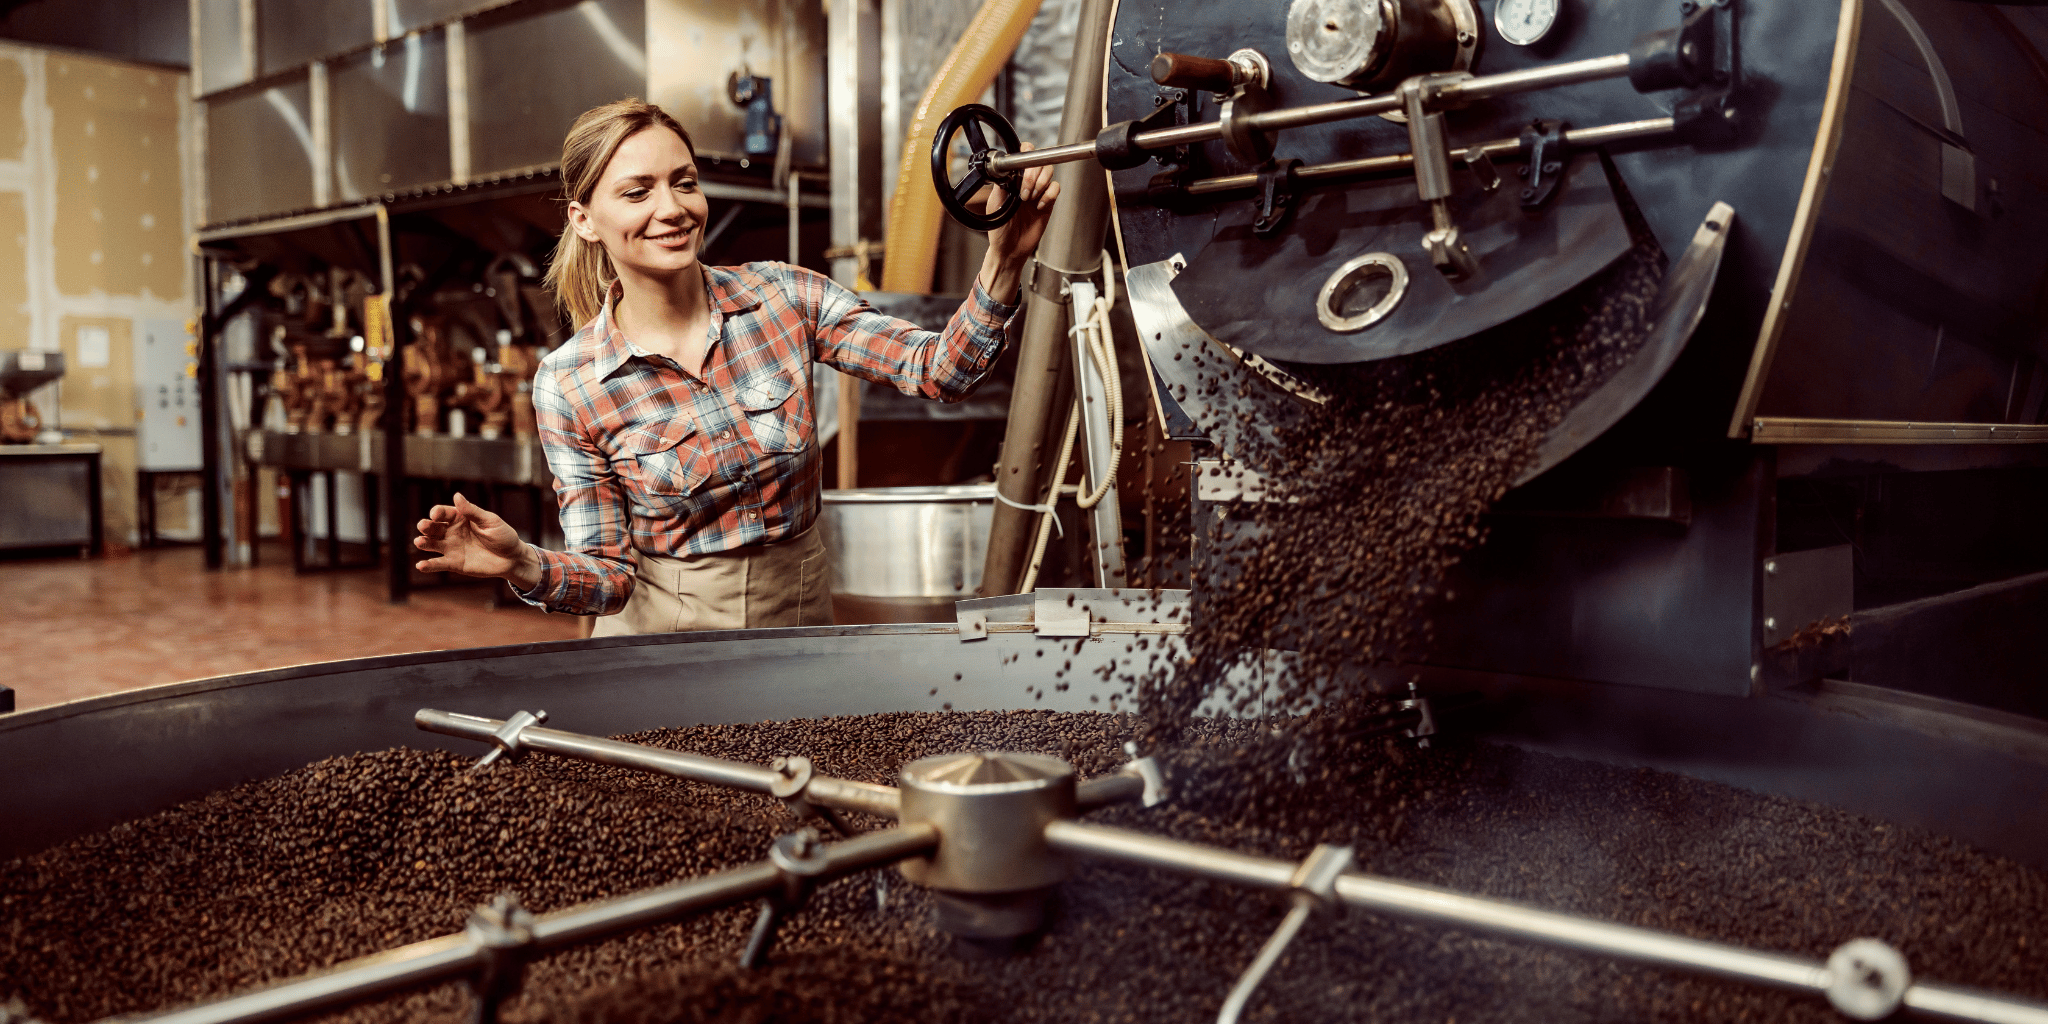 Carlini Coffee high performance coffee roasting facility